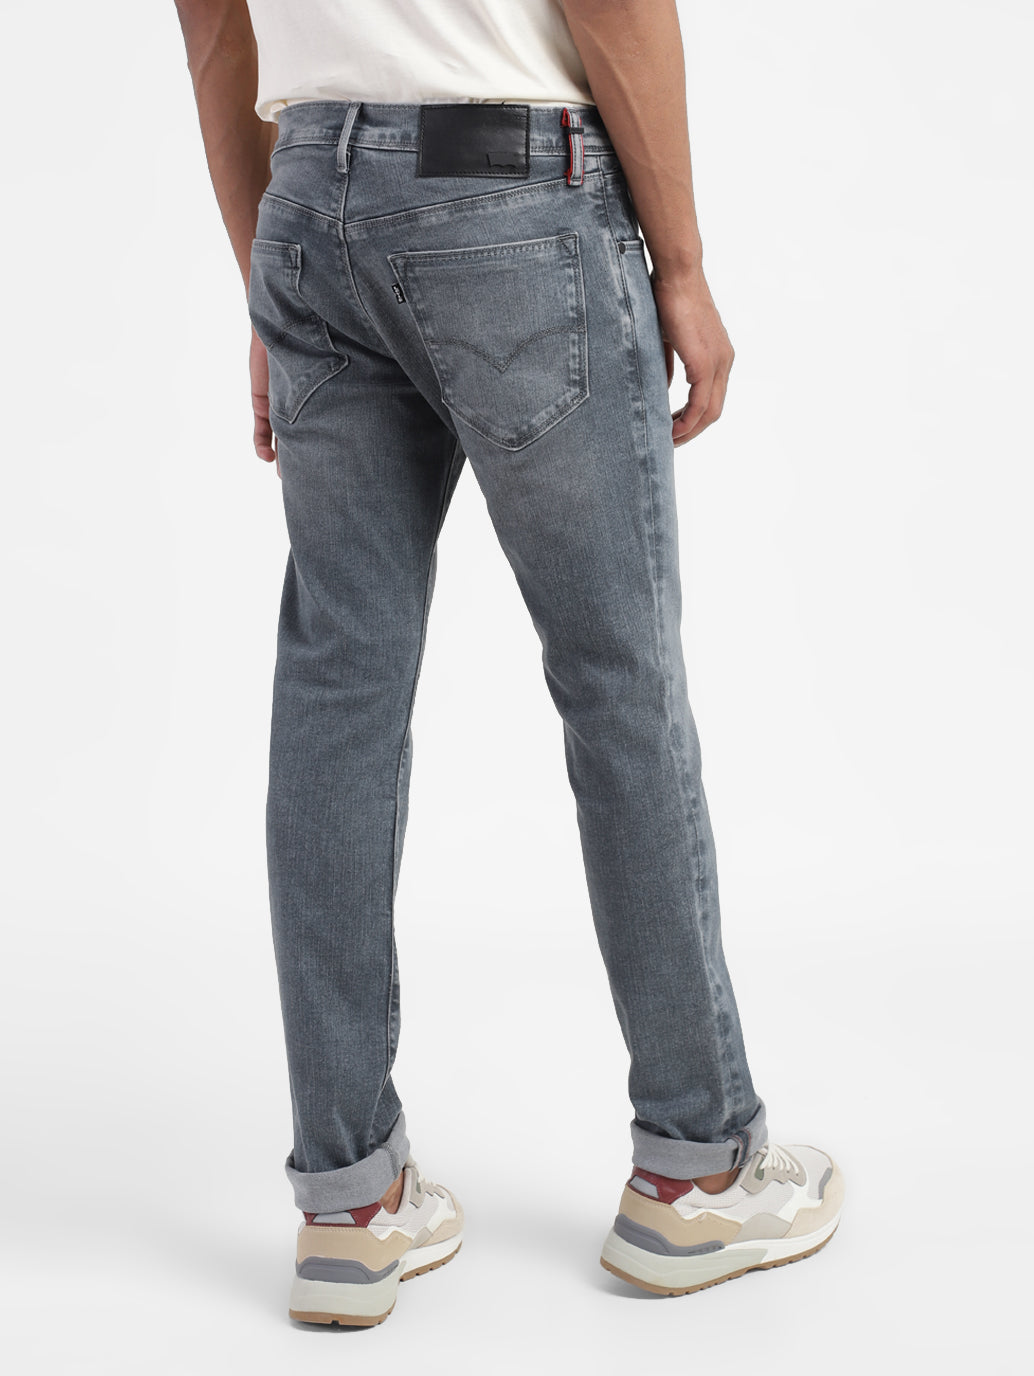 Men's 517 Bootcut Jeans